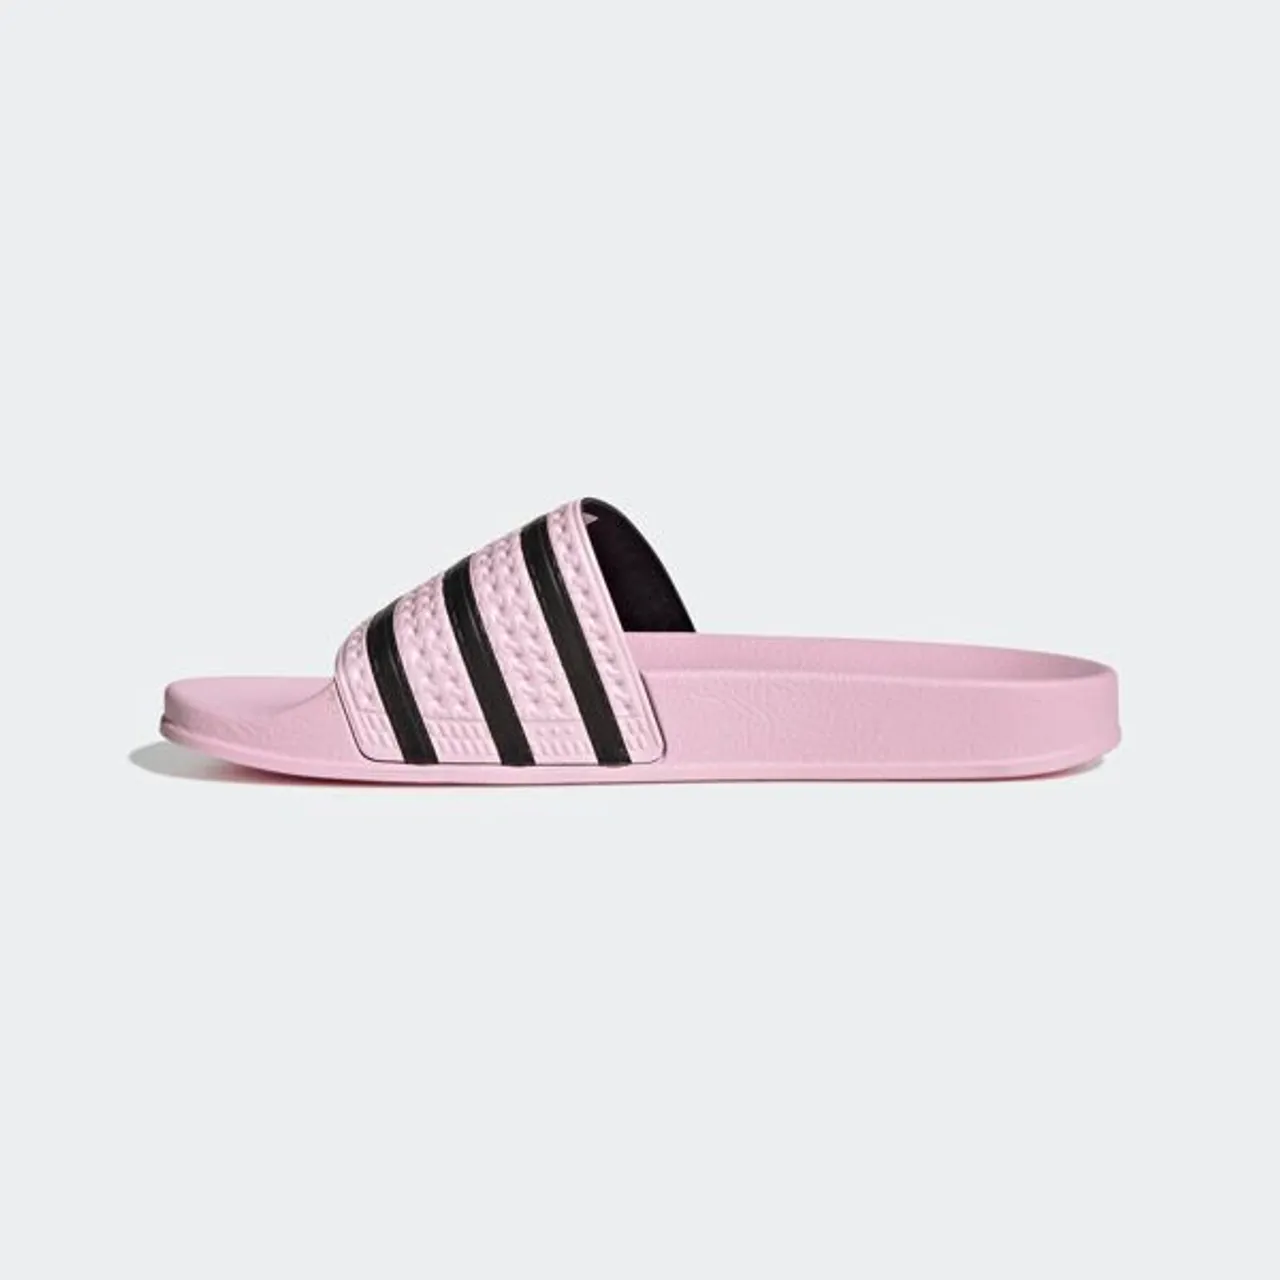 Badesandale ADIDAS ORIGINALS "ADILETTE" Gr. 37, pink (clear pink, core black, clear pink) Schuhe Badelatschen Pantolette Schlappen Bade-Schuhe